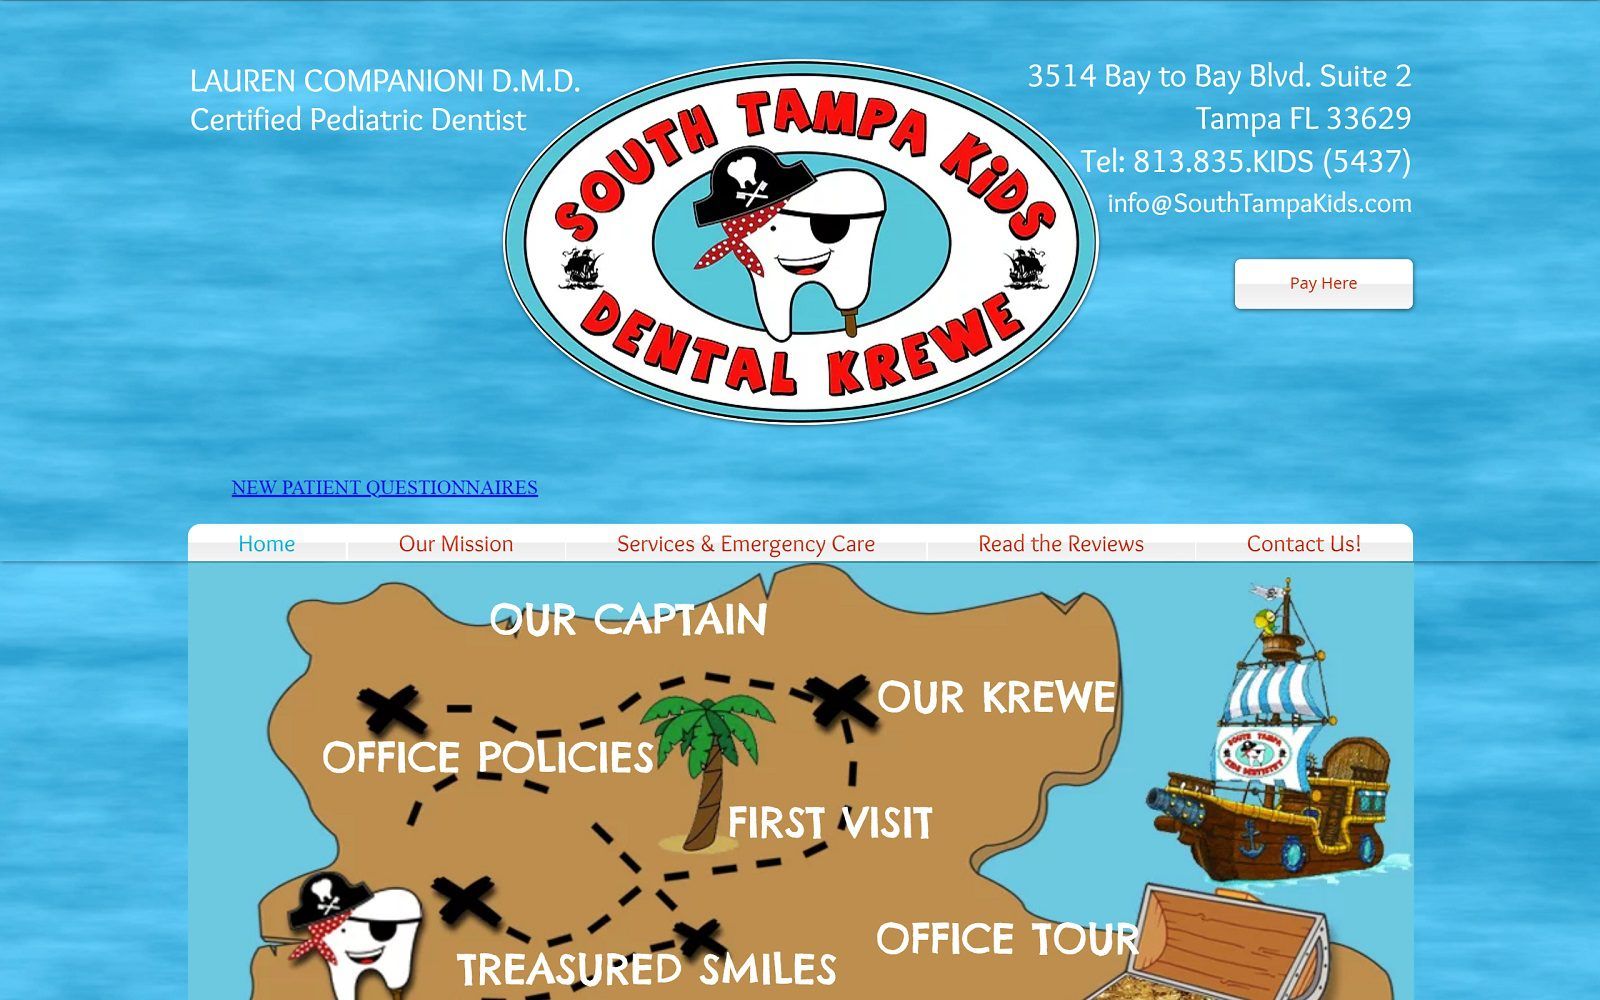 The screenshot of south tampa kids dental krewe website